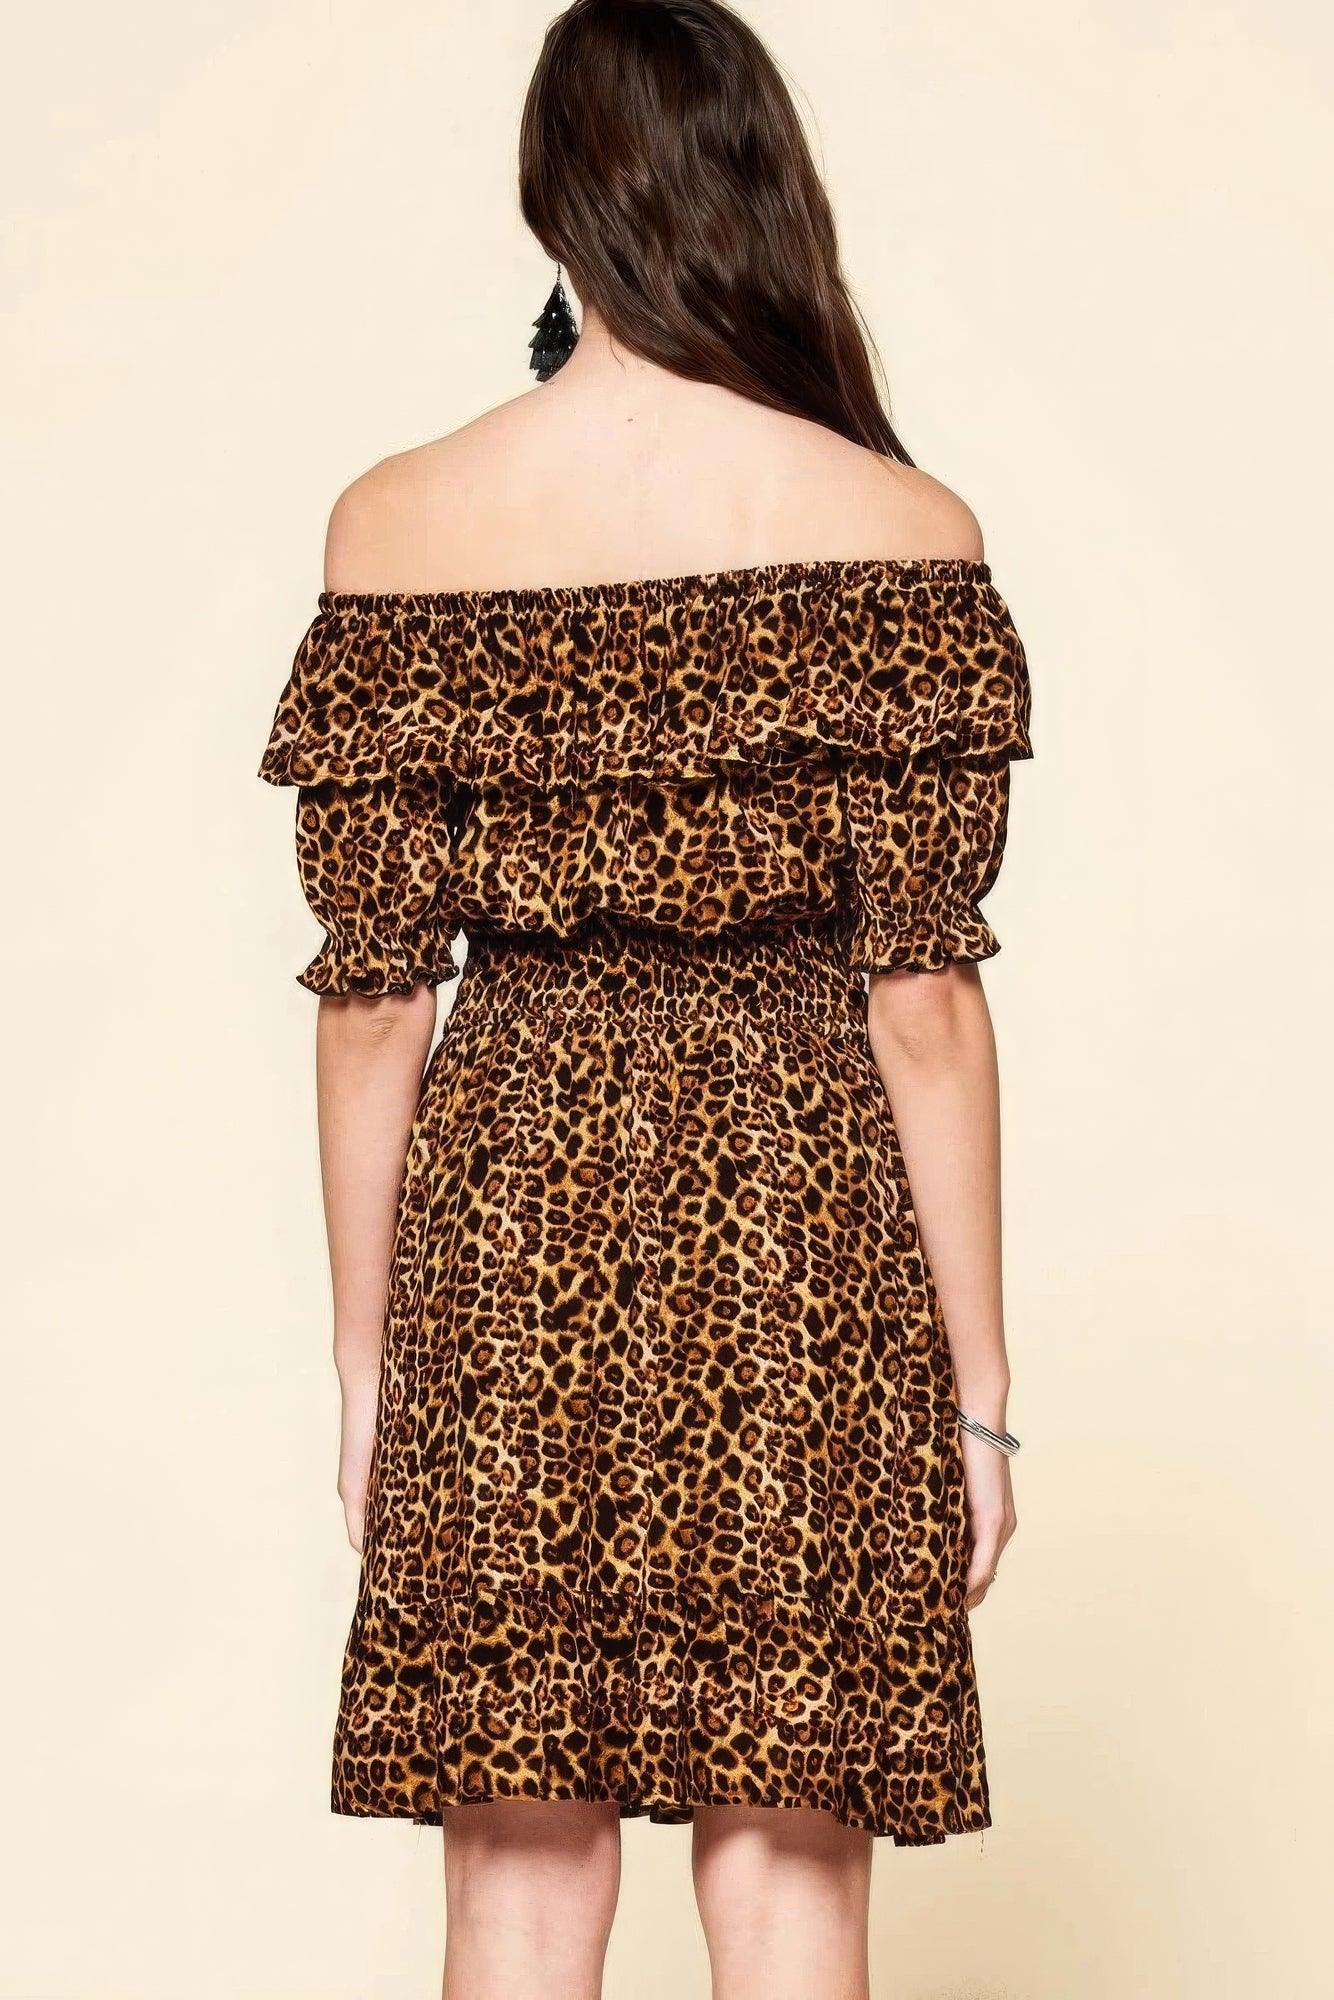 Leopard Printed Woven Dress - AMIClubwear